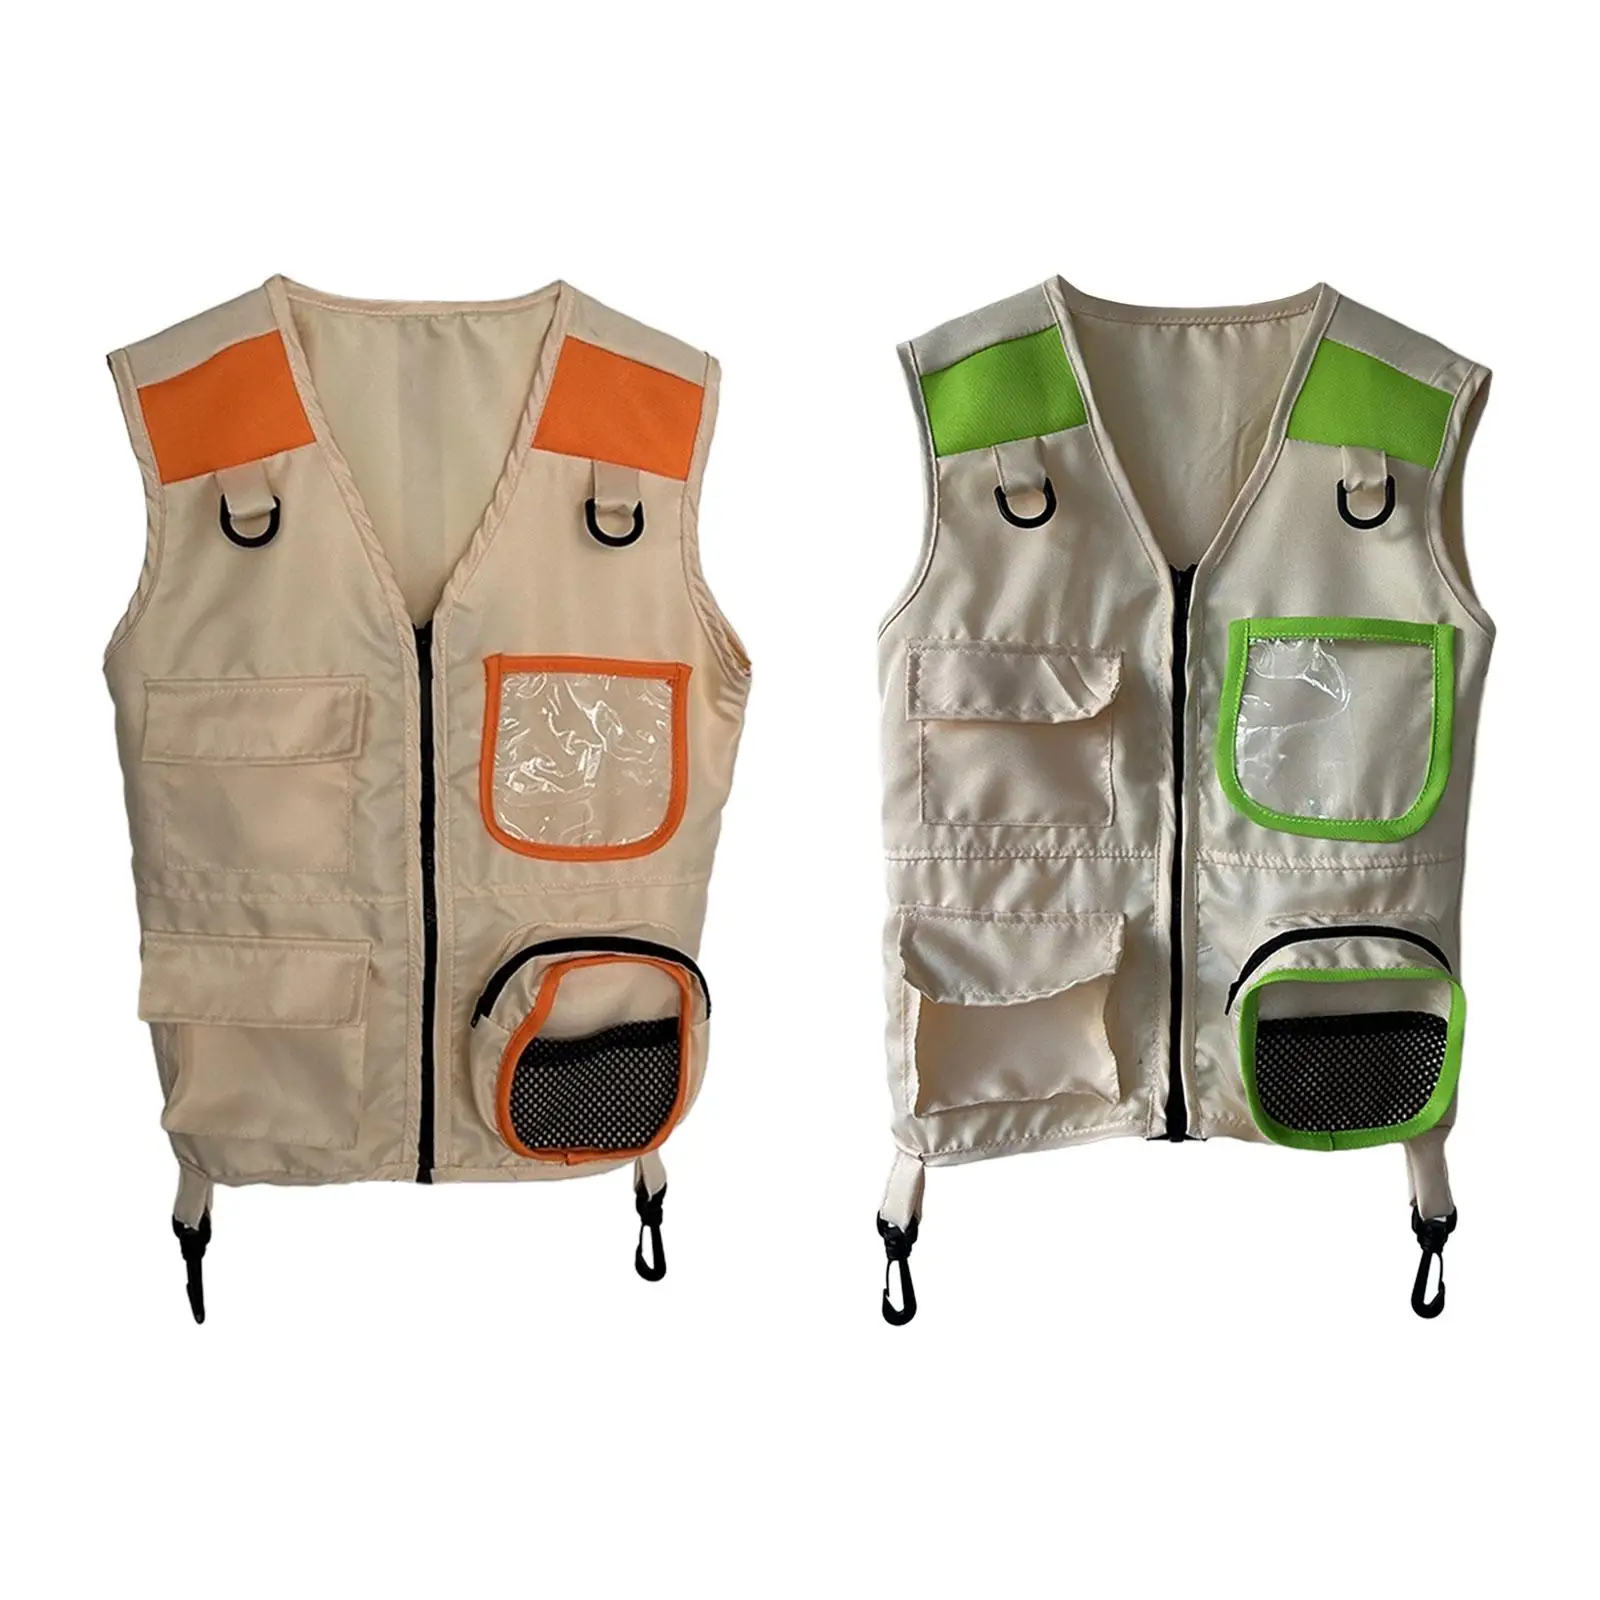 

Kids Explorer Vest Kids Camping Gear Outdoor Adventure Vest Outfit Cargo Vest for Boys Girls Toddlers Outdoor Hiking Children